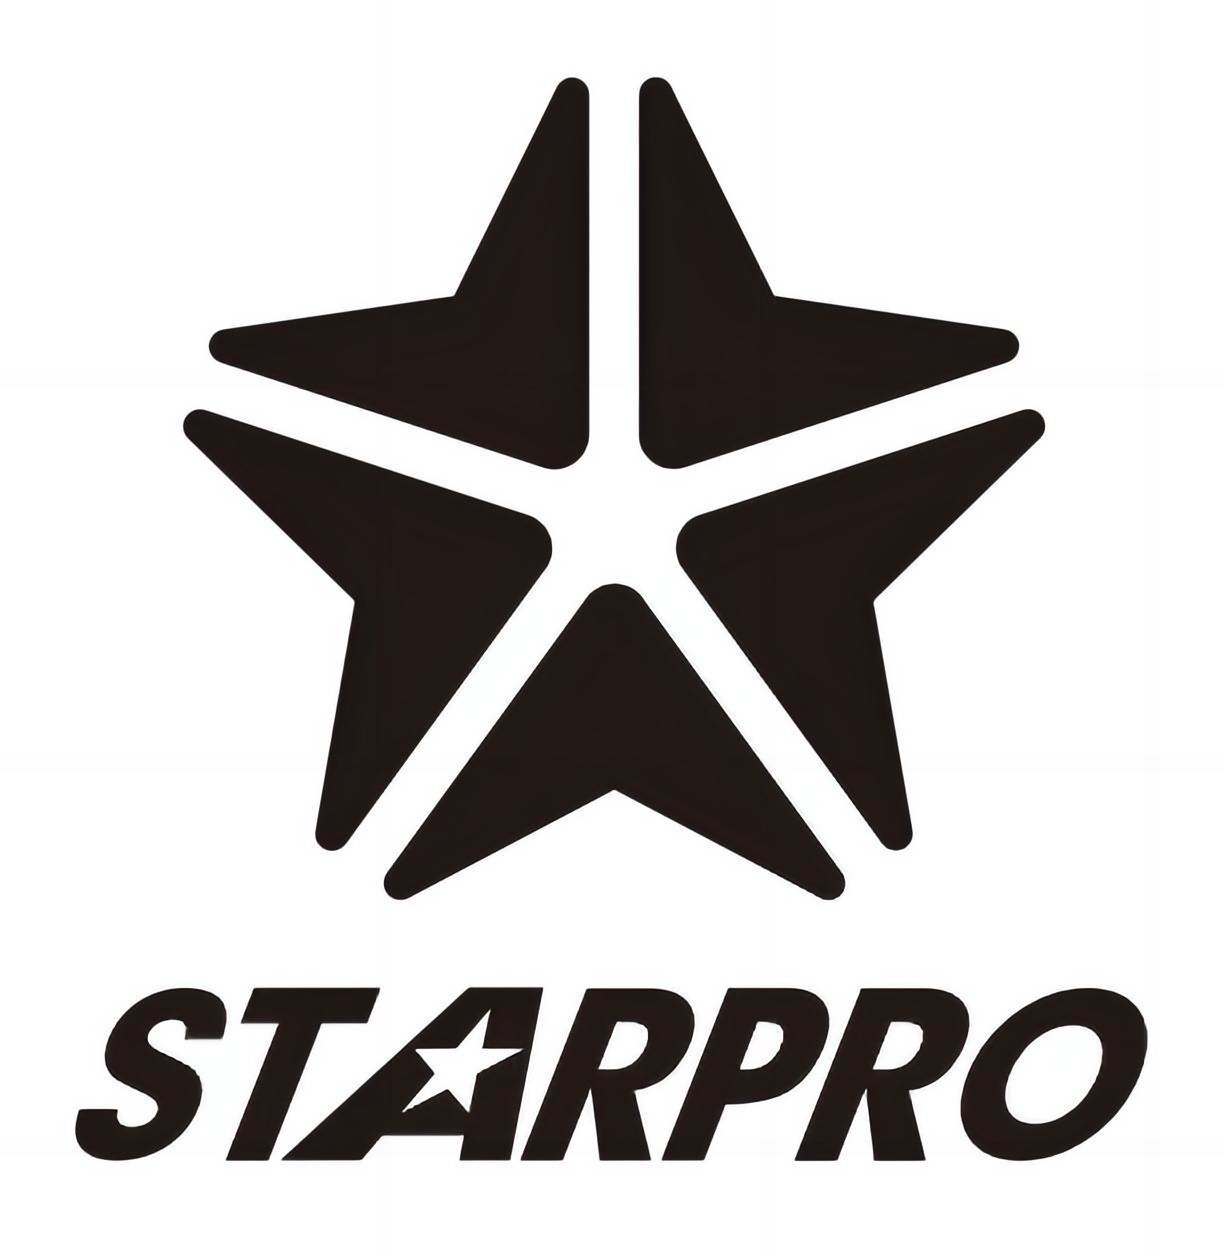 STARPRO